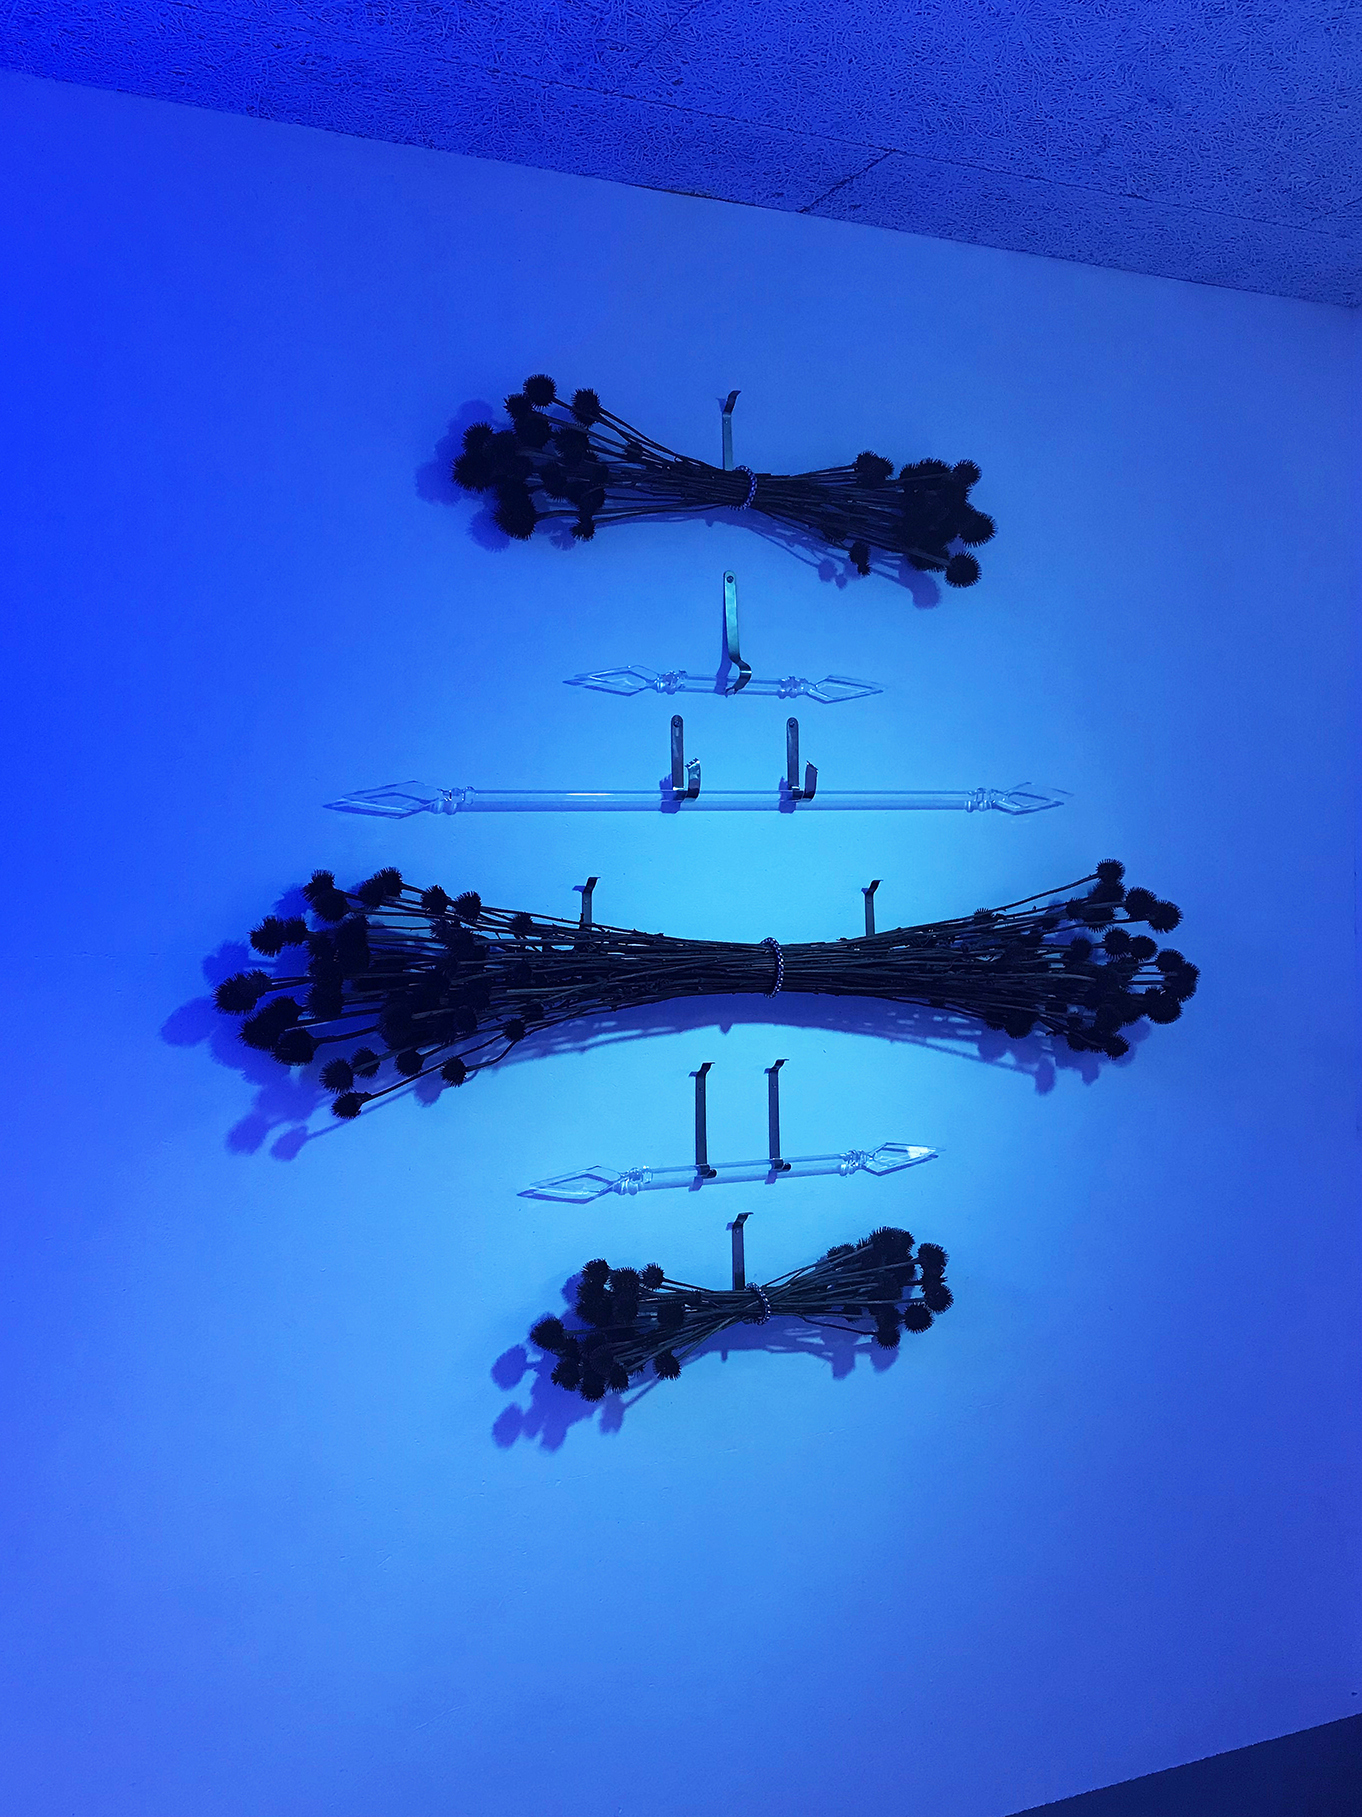 Floryan Varennes, Panoply 2.0 (détail), 2020 Double glass arrows, medical spacers, echinacea purpurea, steel chains, blue light. Collaboration: Cardis Glass Works, Switzerland. 130 x 140 cm